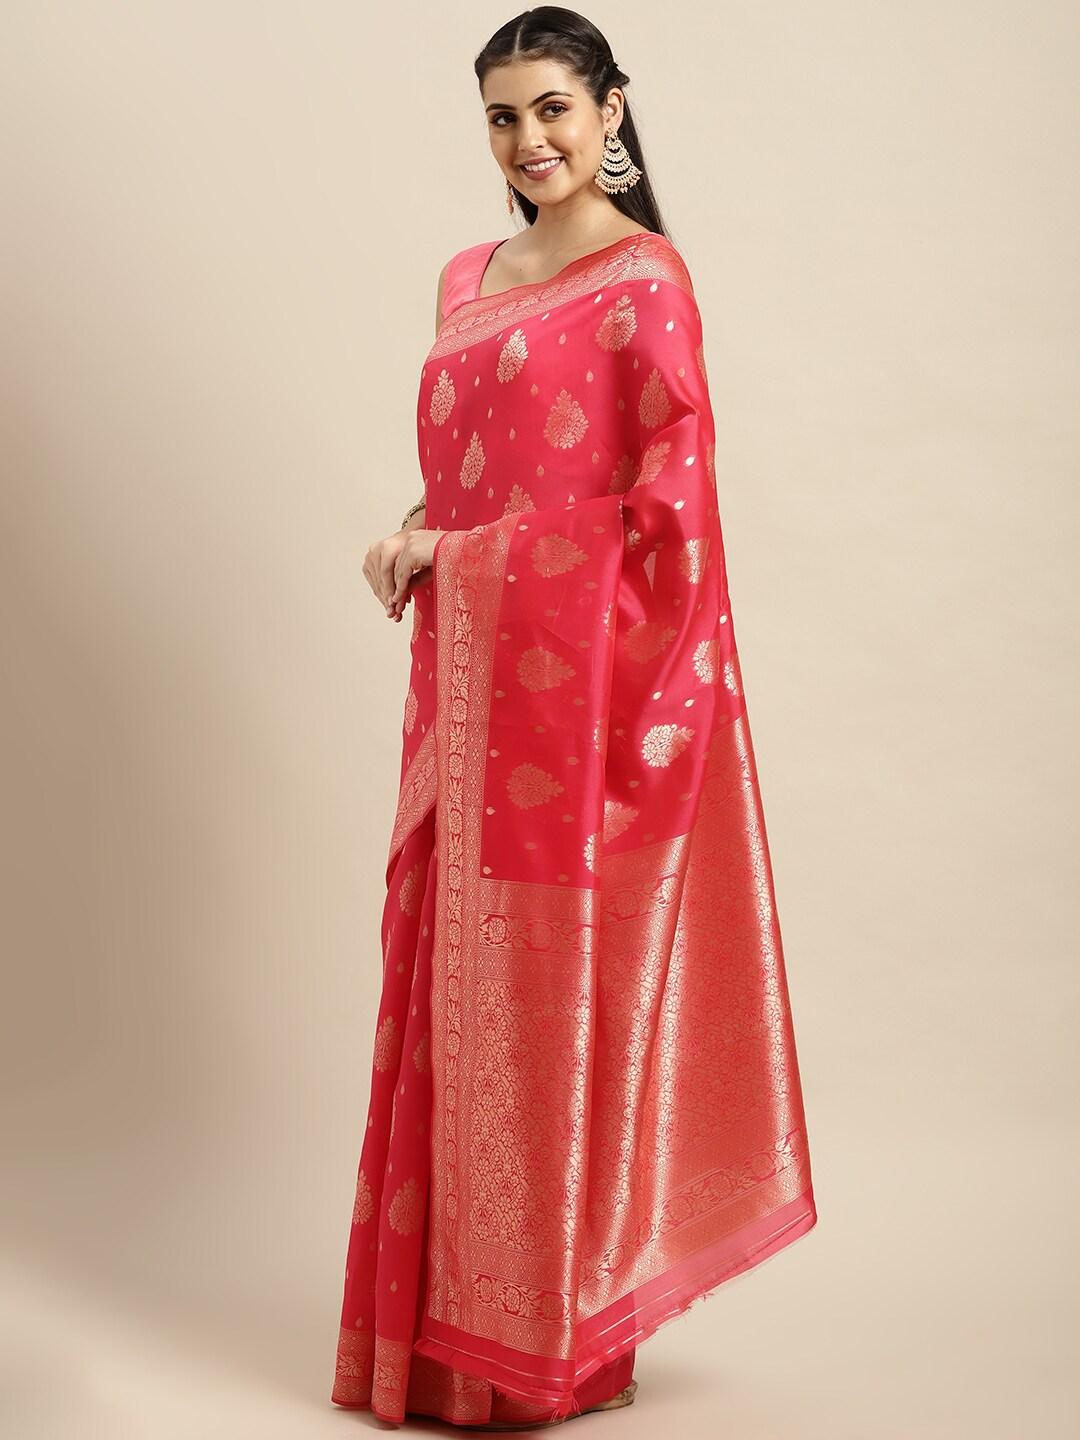 vairagee pink & golden ethnic motifs banarasi woven design saree